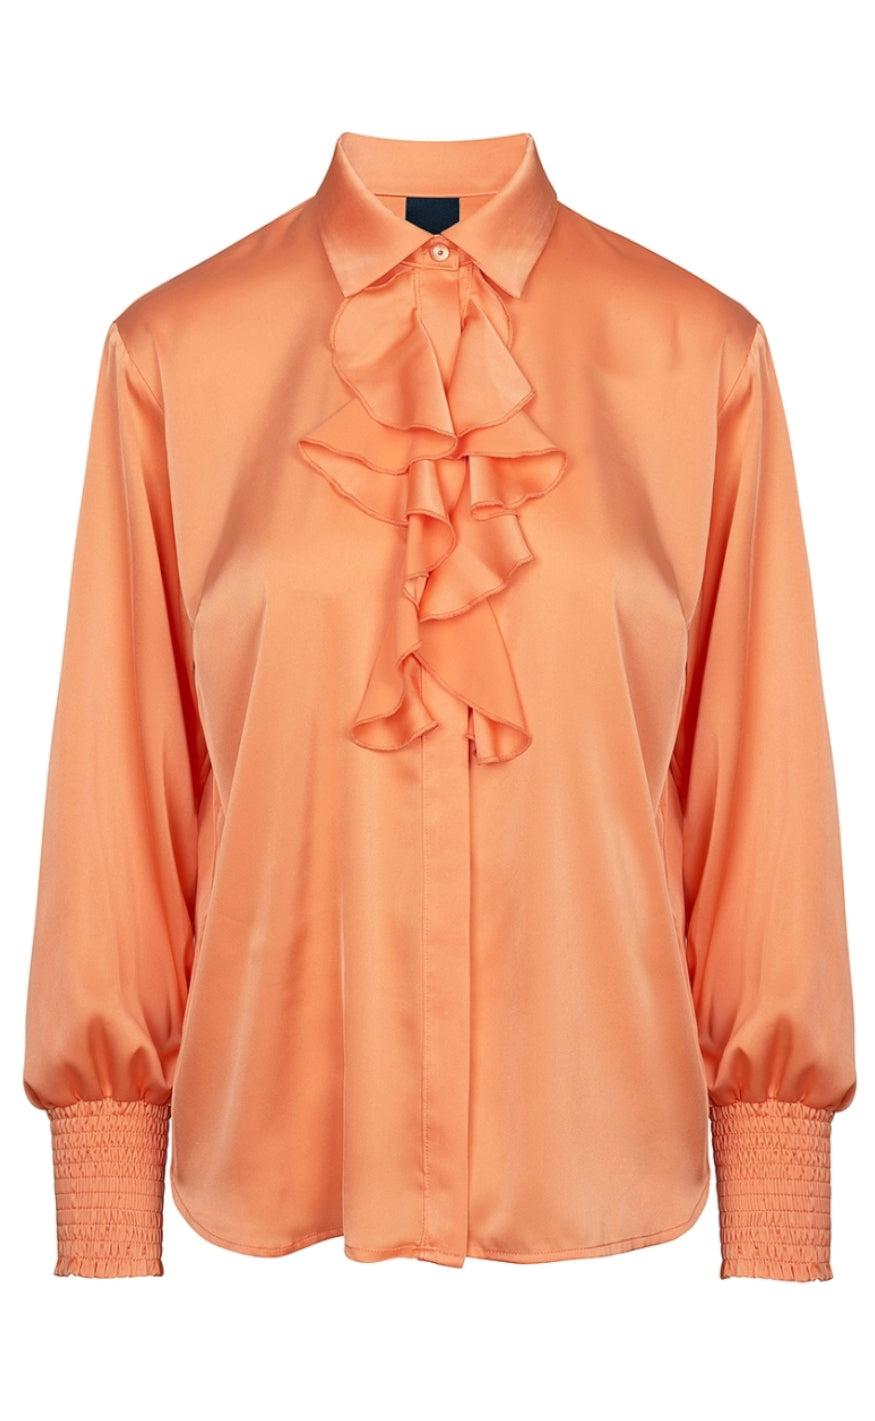 Se One Two Luxzuz Skjorte - Gertalia - Apricot Wash hos Fashionbystrand